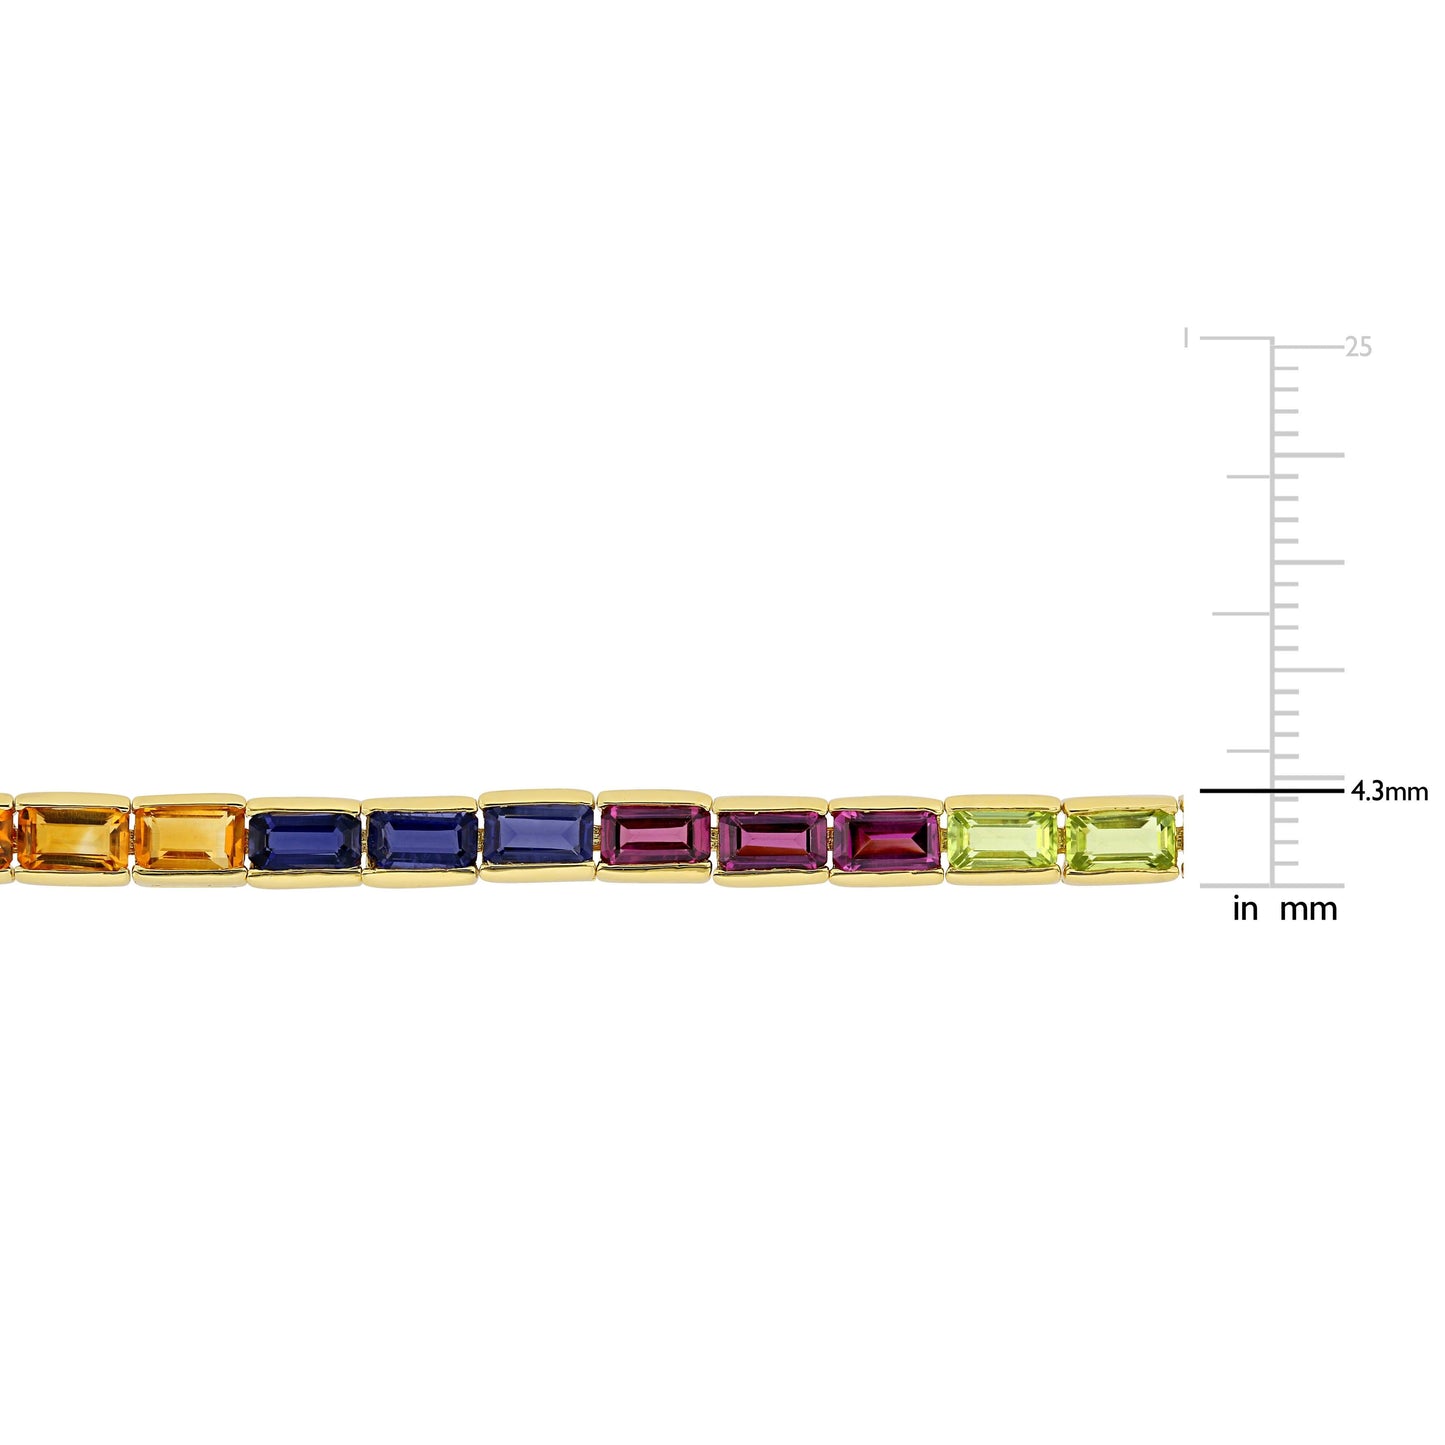 10 3/4ct Rainbow Multi-Gemstone Bracelet